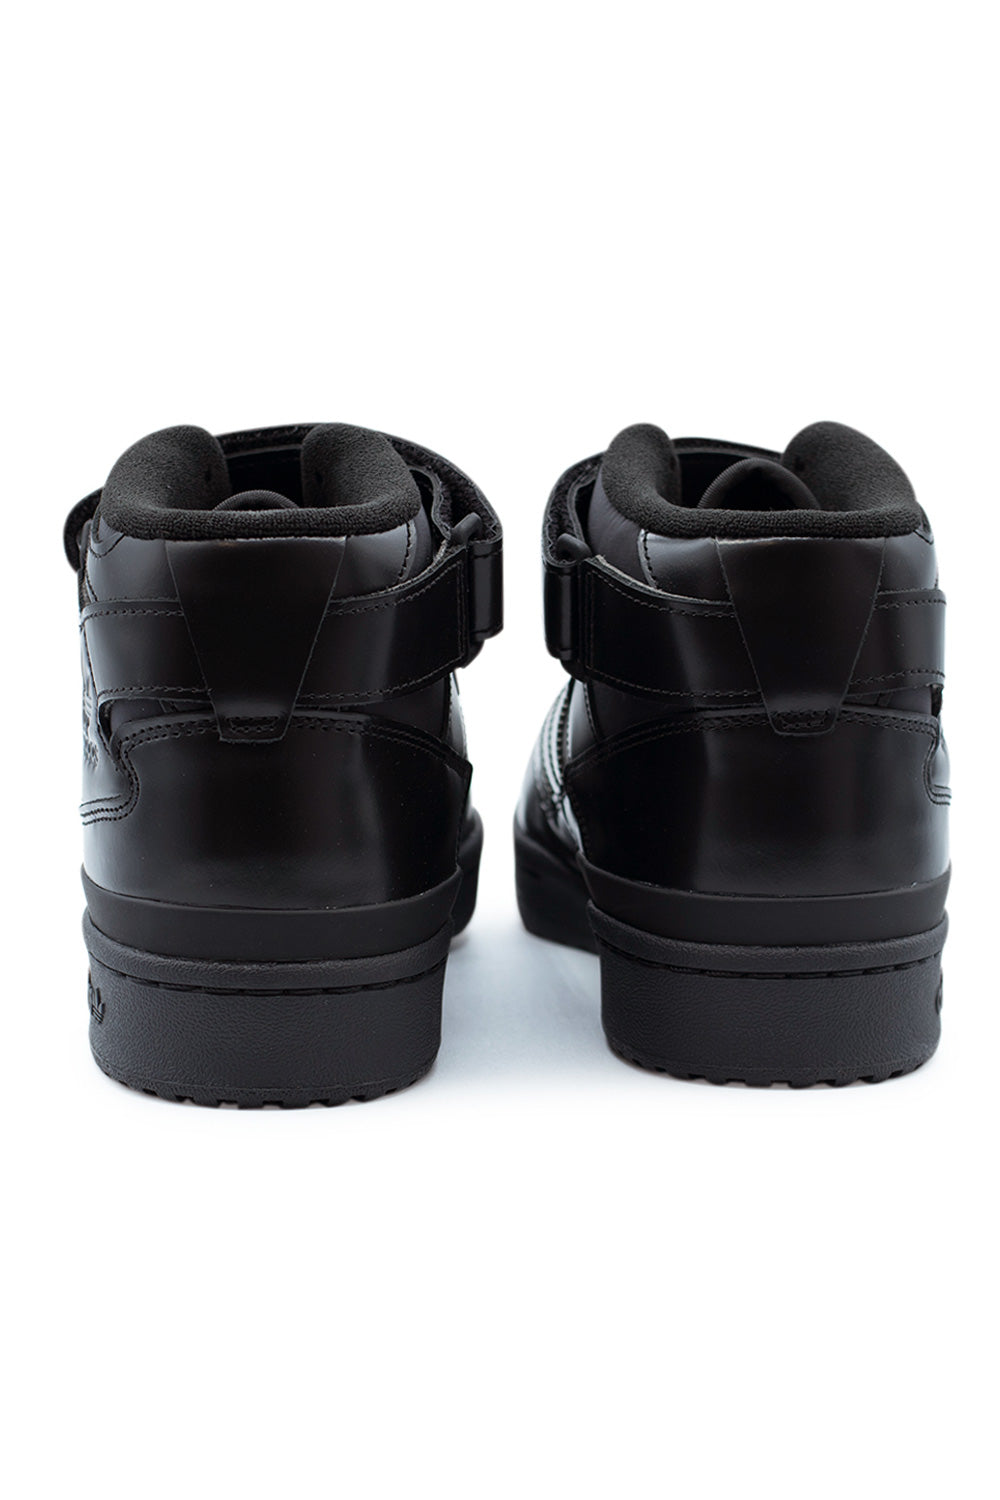 Adidas Forum 84 Mid ADV Shoe (Heitor Da Silva) Core Black / Silver Metallic / Core Black - BONKERS